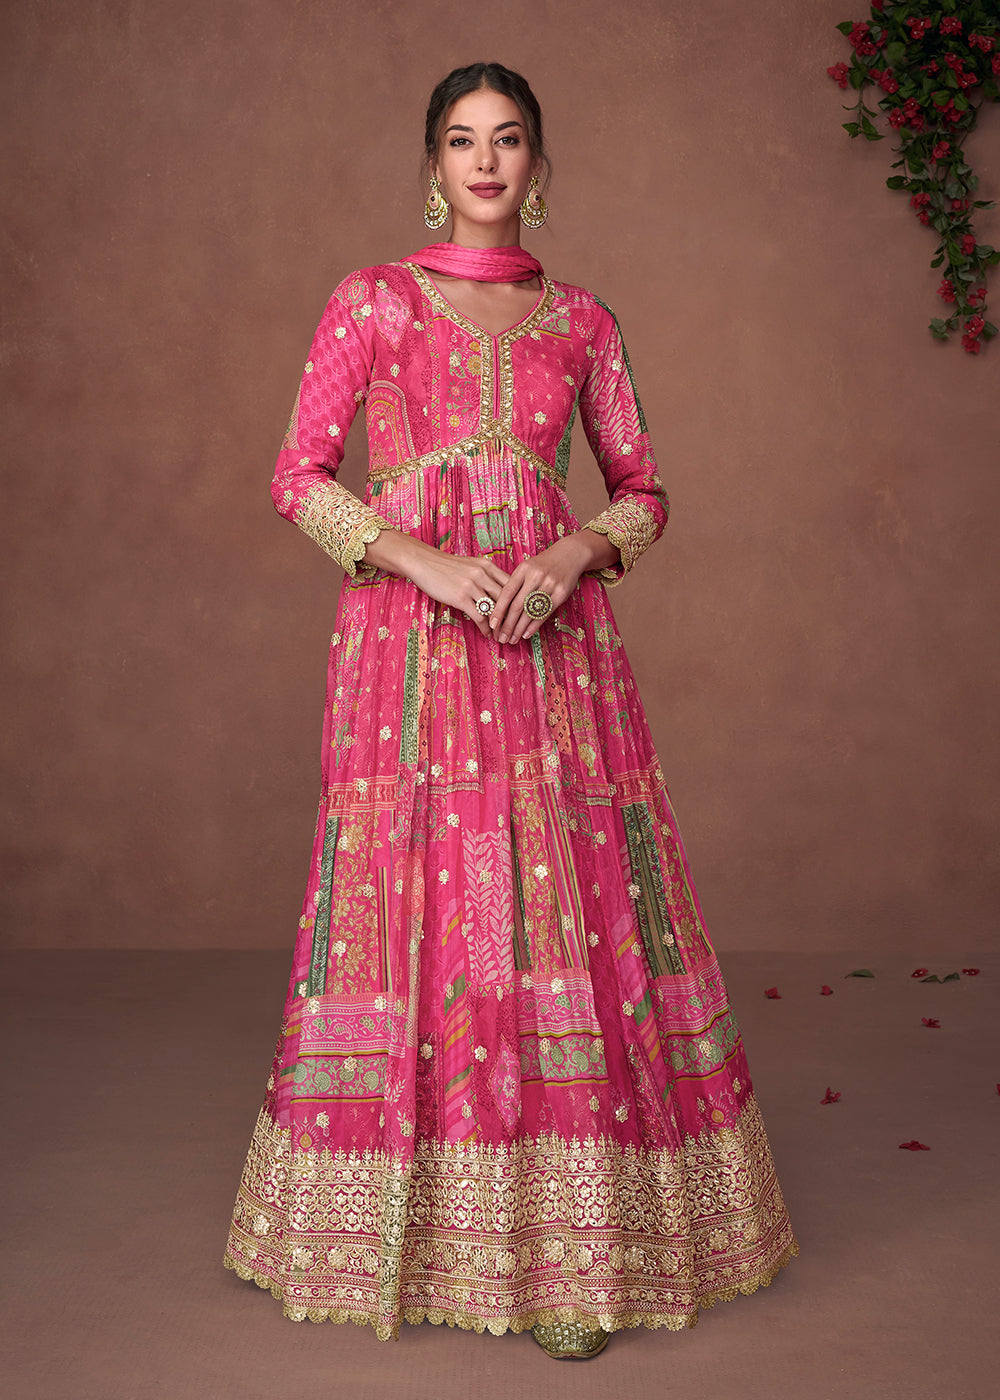 Buy Now Digital Printed Fuchsia Pink Organza Silk Designer Anarkali Gown Online in USA, UK, Australia, Canada & Worldwide at Empress Clothing.